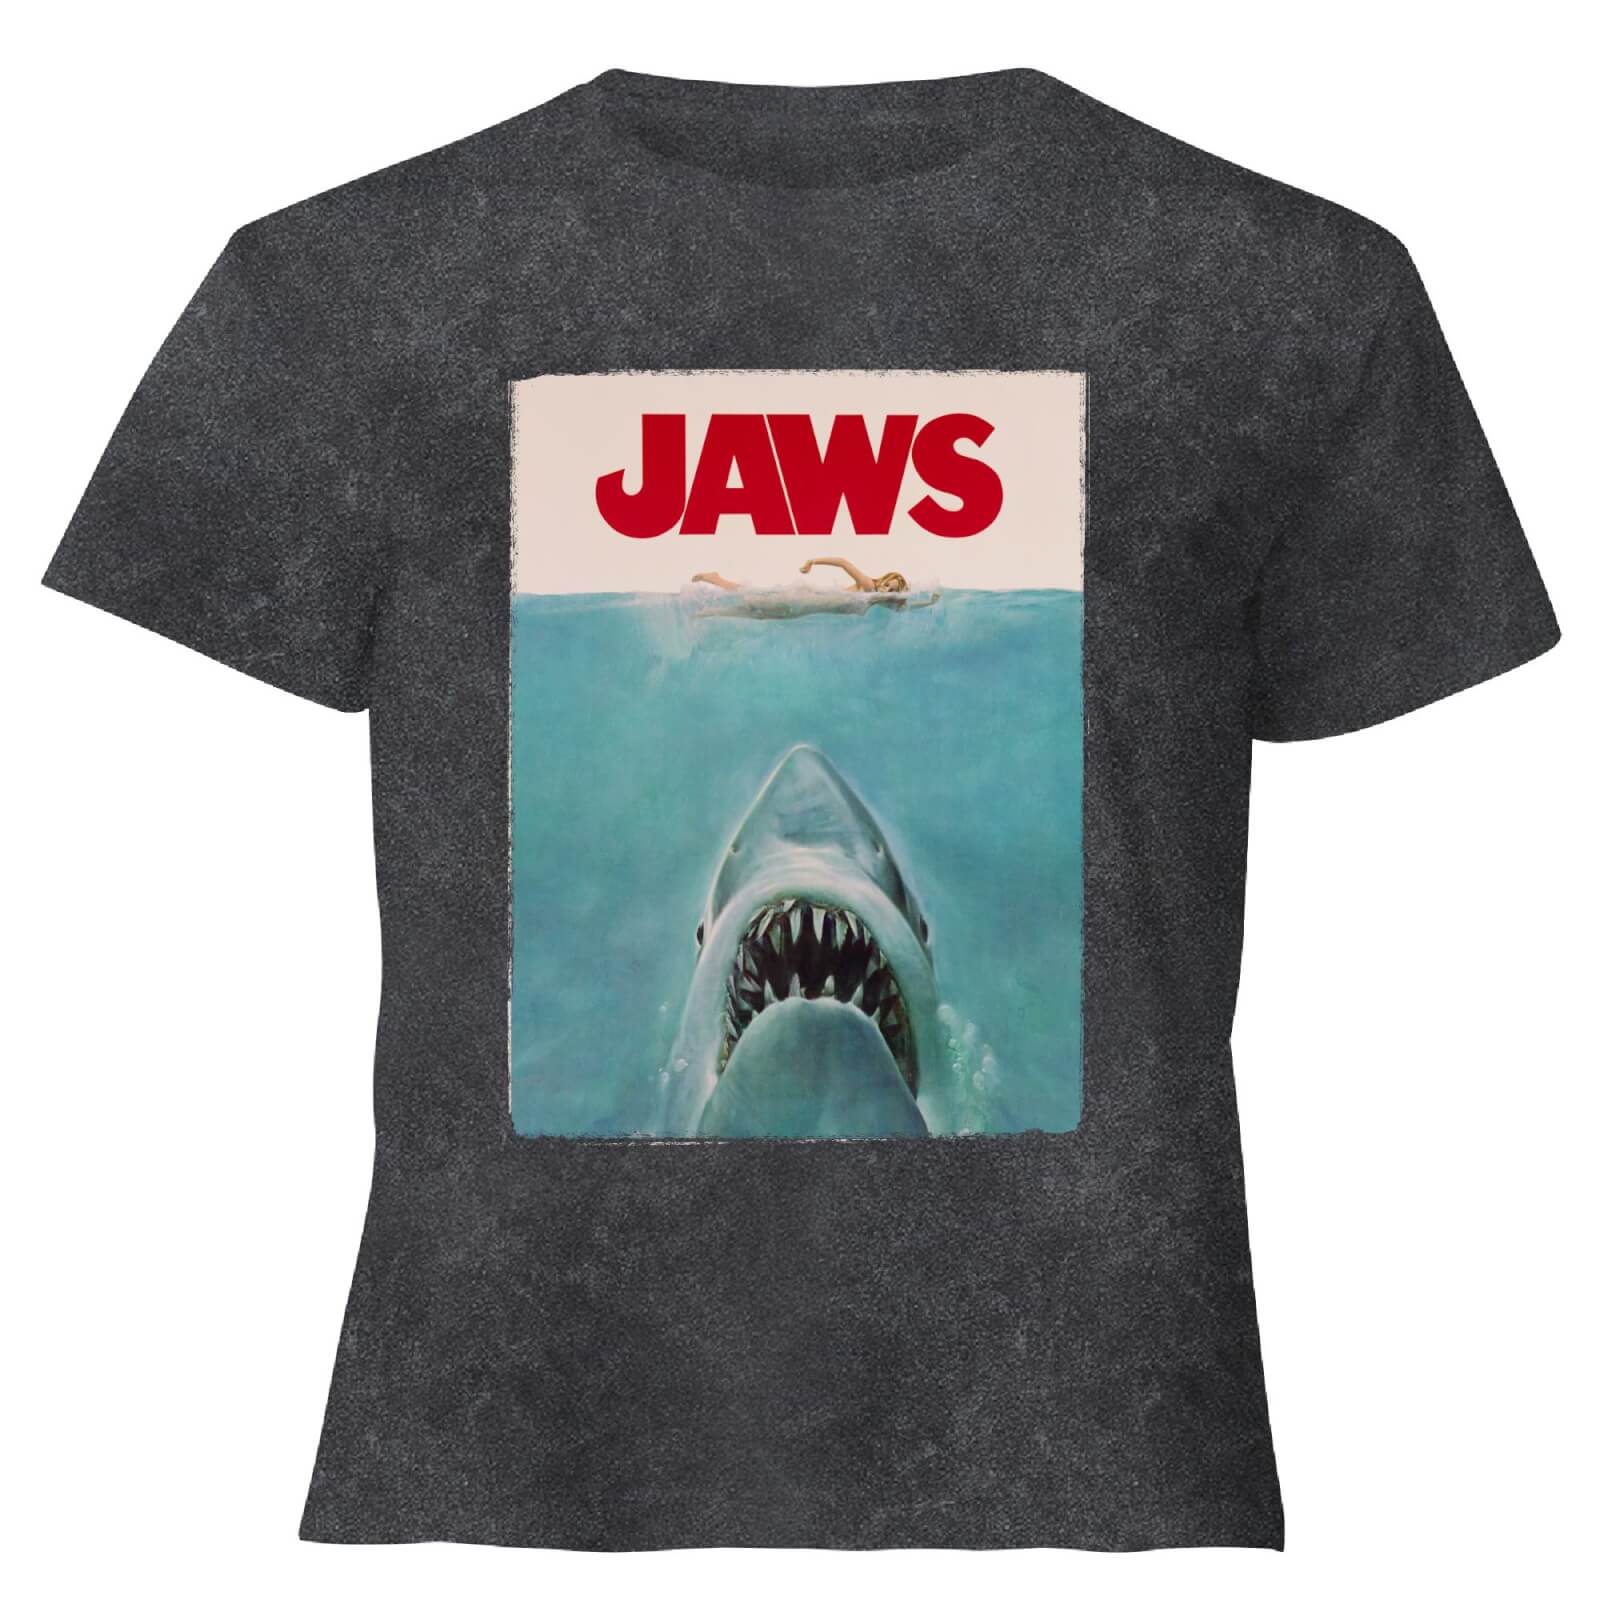 Jaws Classic Poster - Women's Cropped T-Shirt - Black Acid Wash - XS - Black Acid Wash